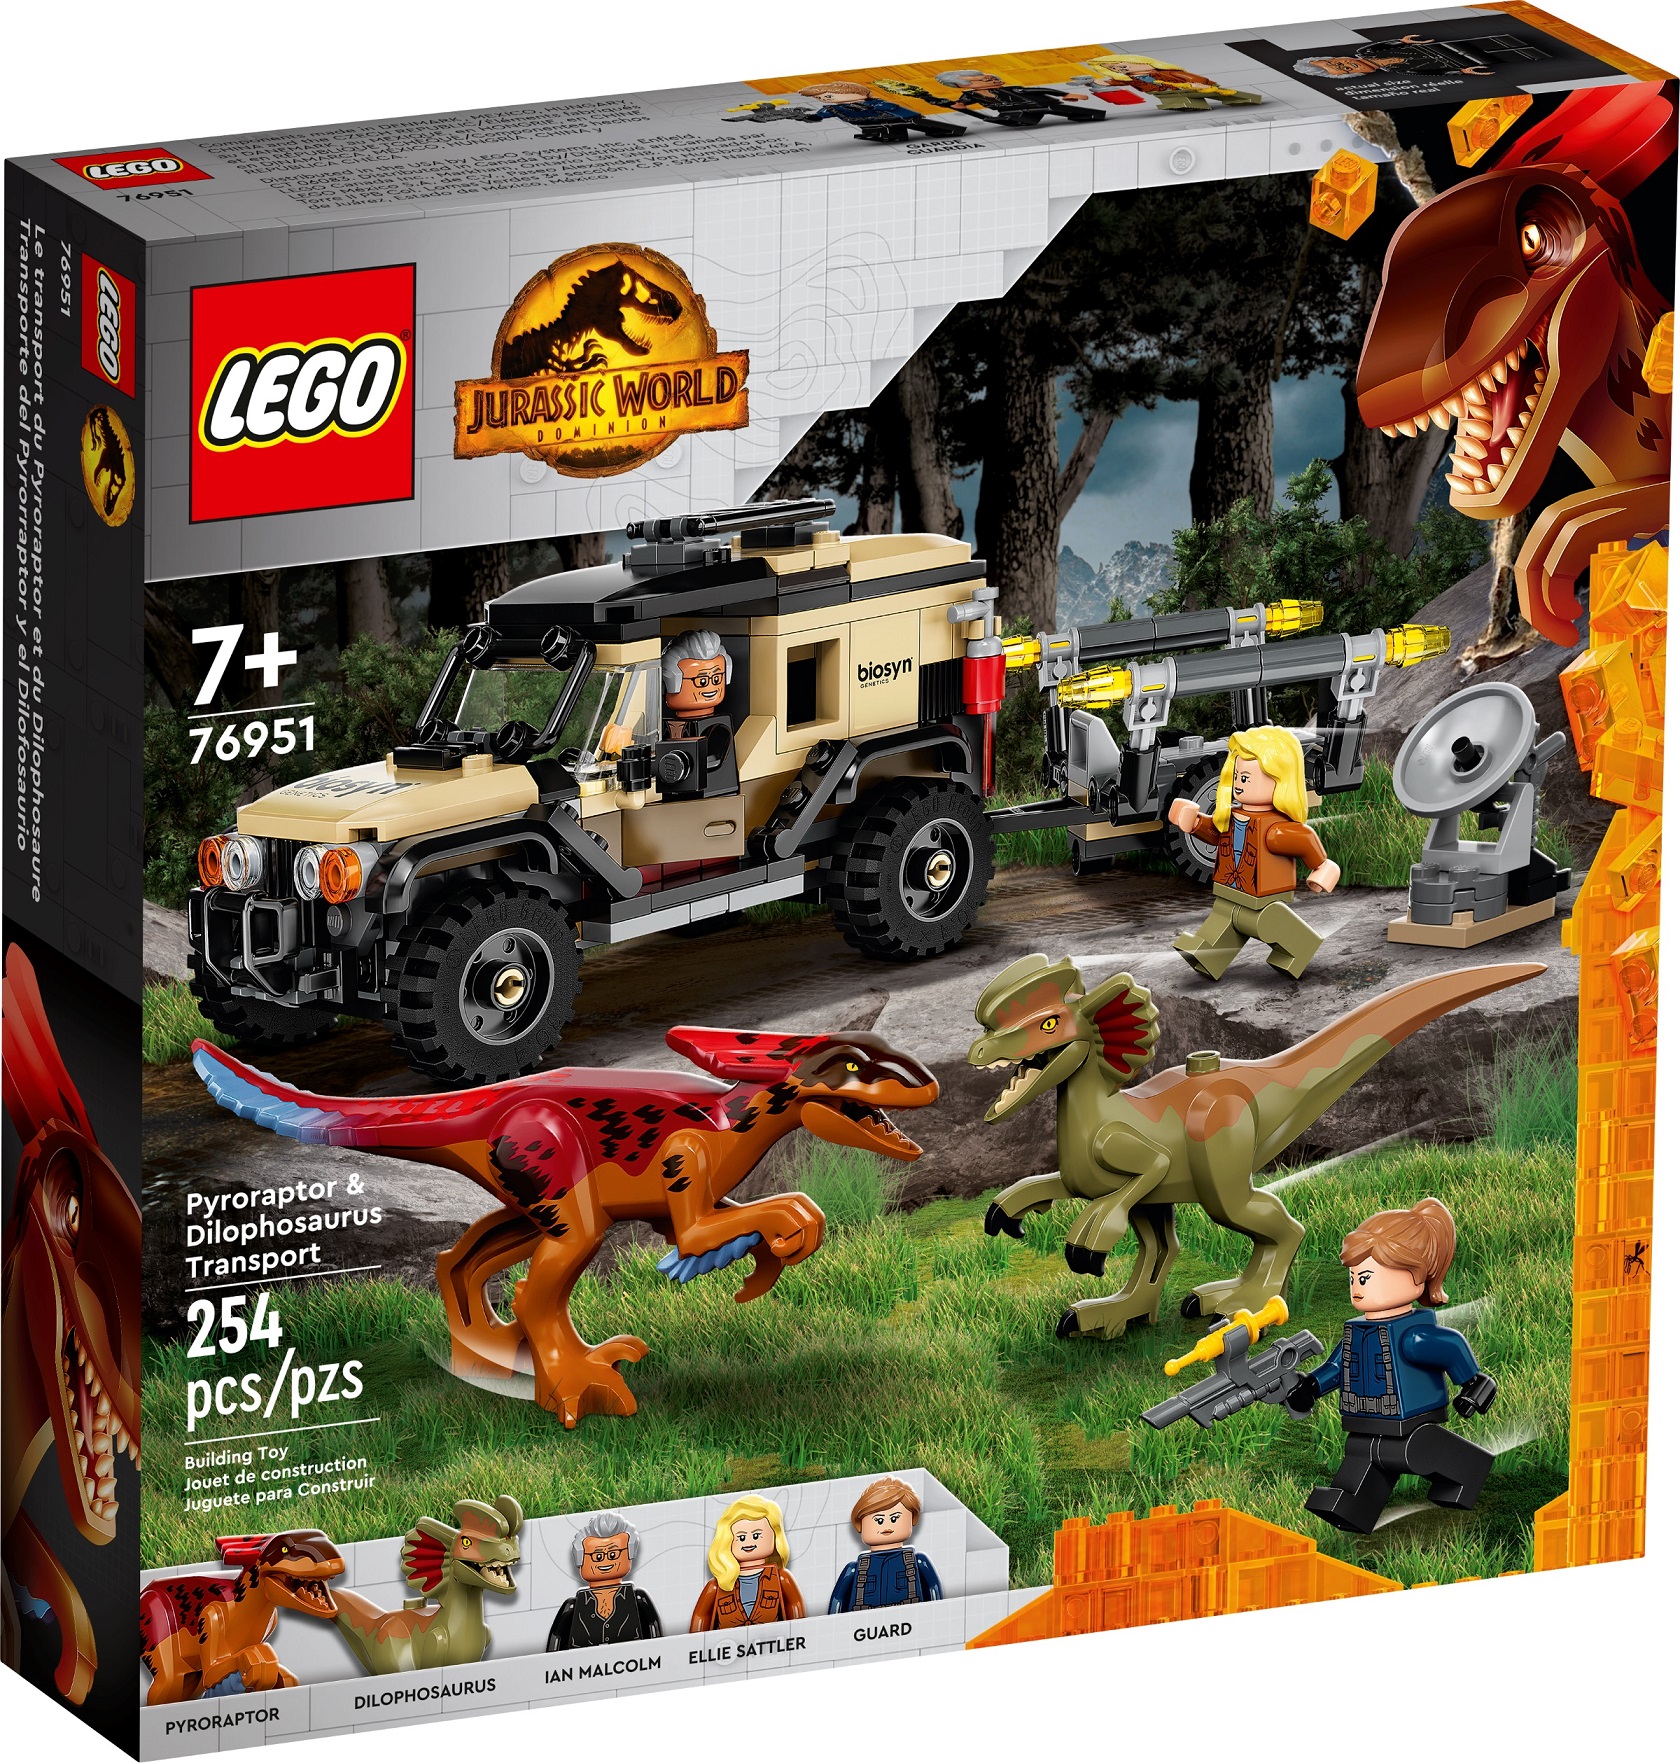 Brickfinder - LEGO Jurassic Park 30th Anniversary Sets Revealed!